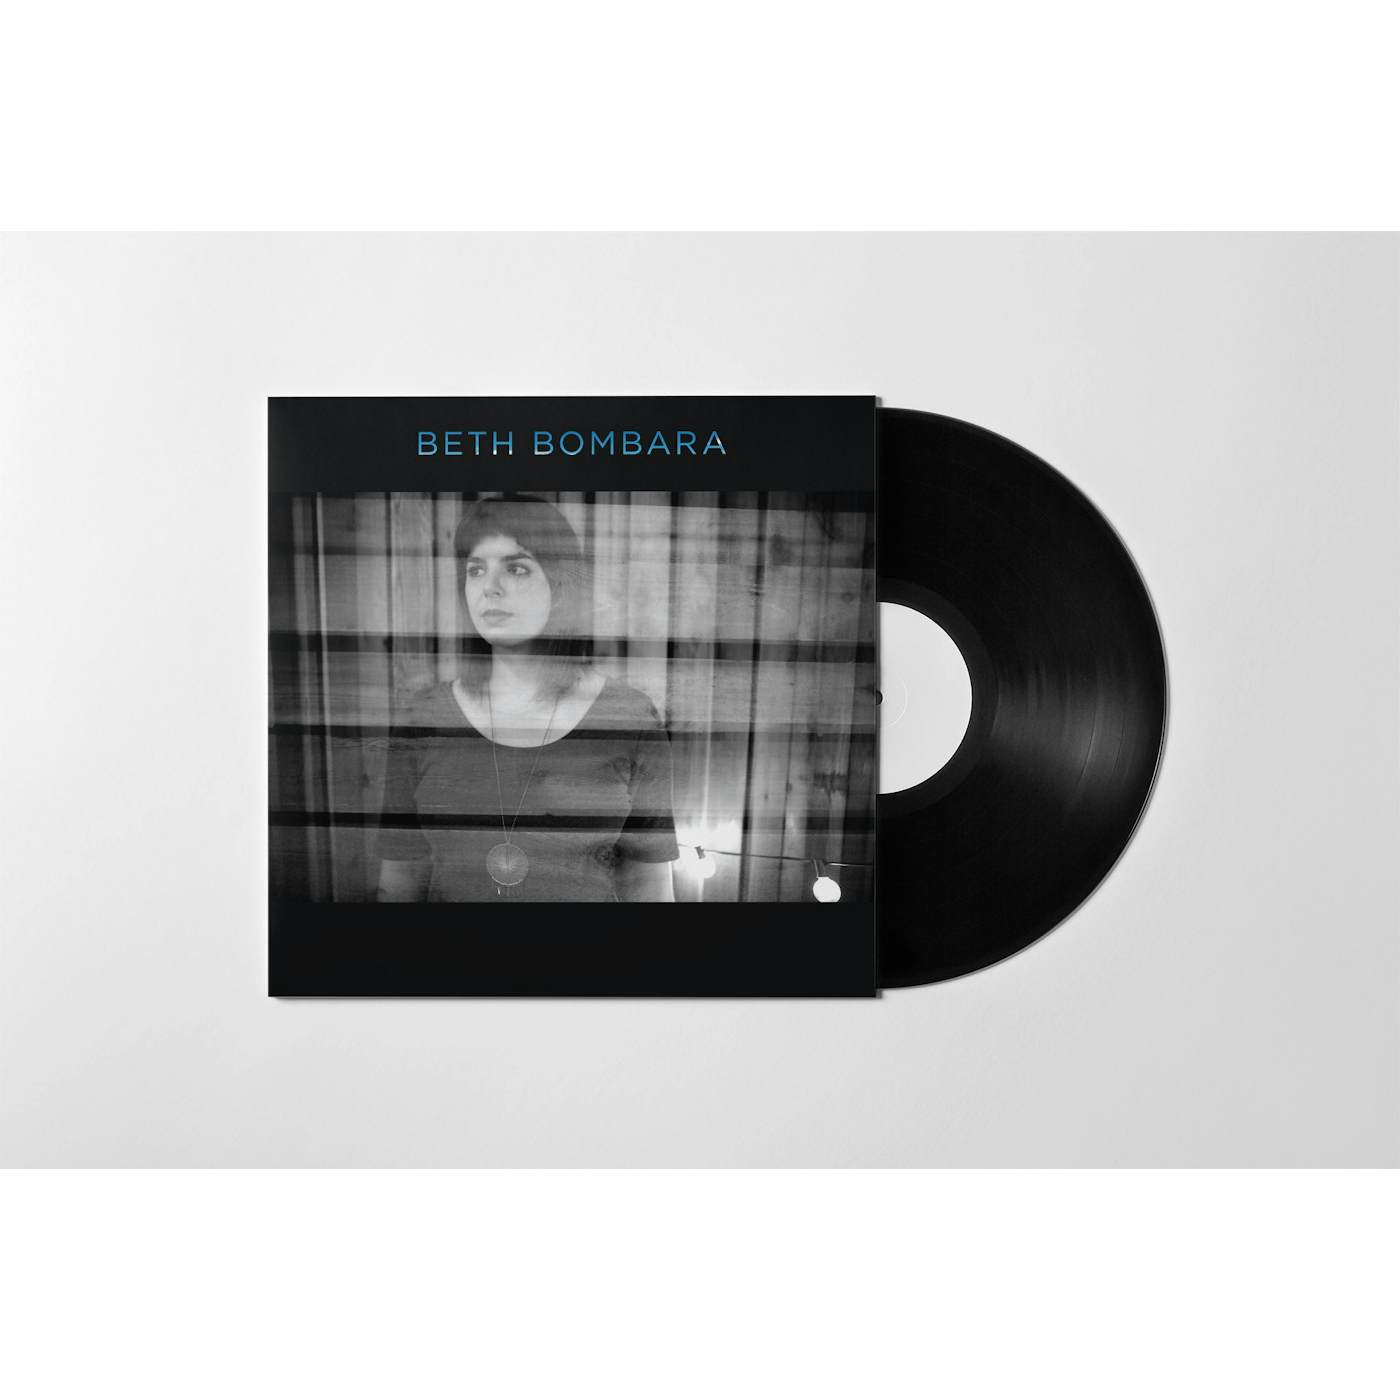 Beth Bombara 12"LP (Vinyl)